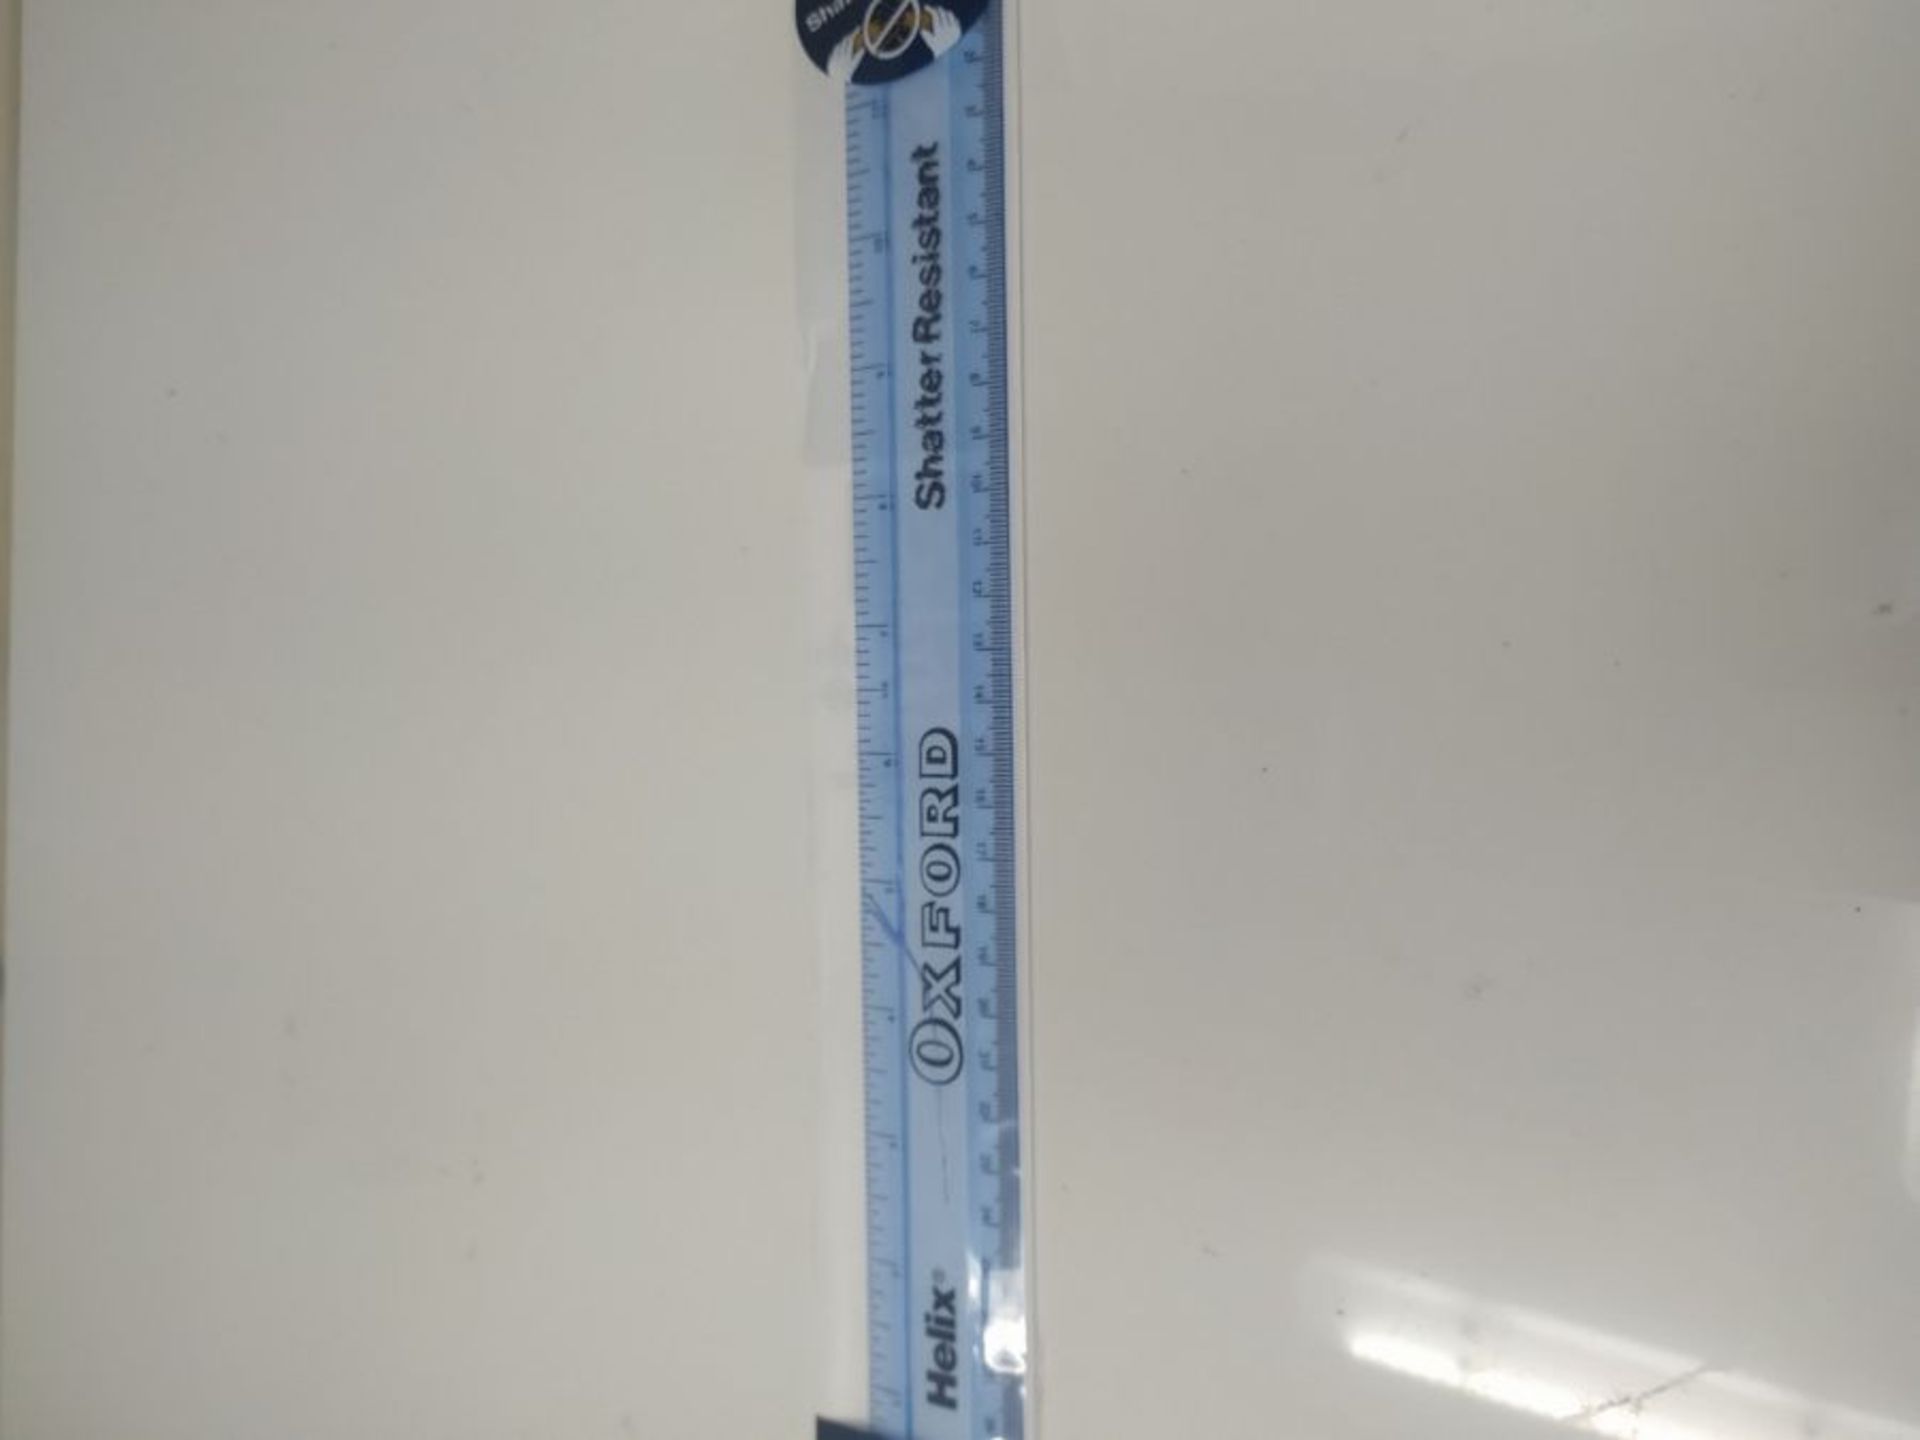 Helix Oxford 12 inch 30cm Shatter Resistant Ruler - Image 2 of 2